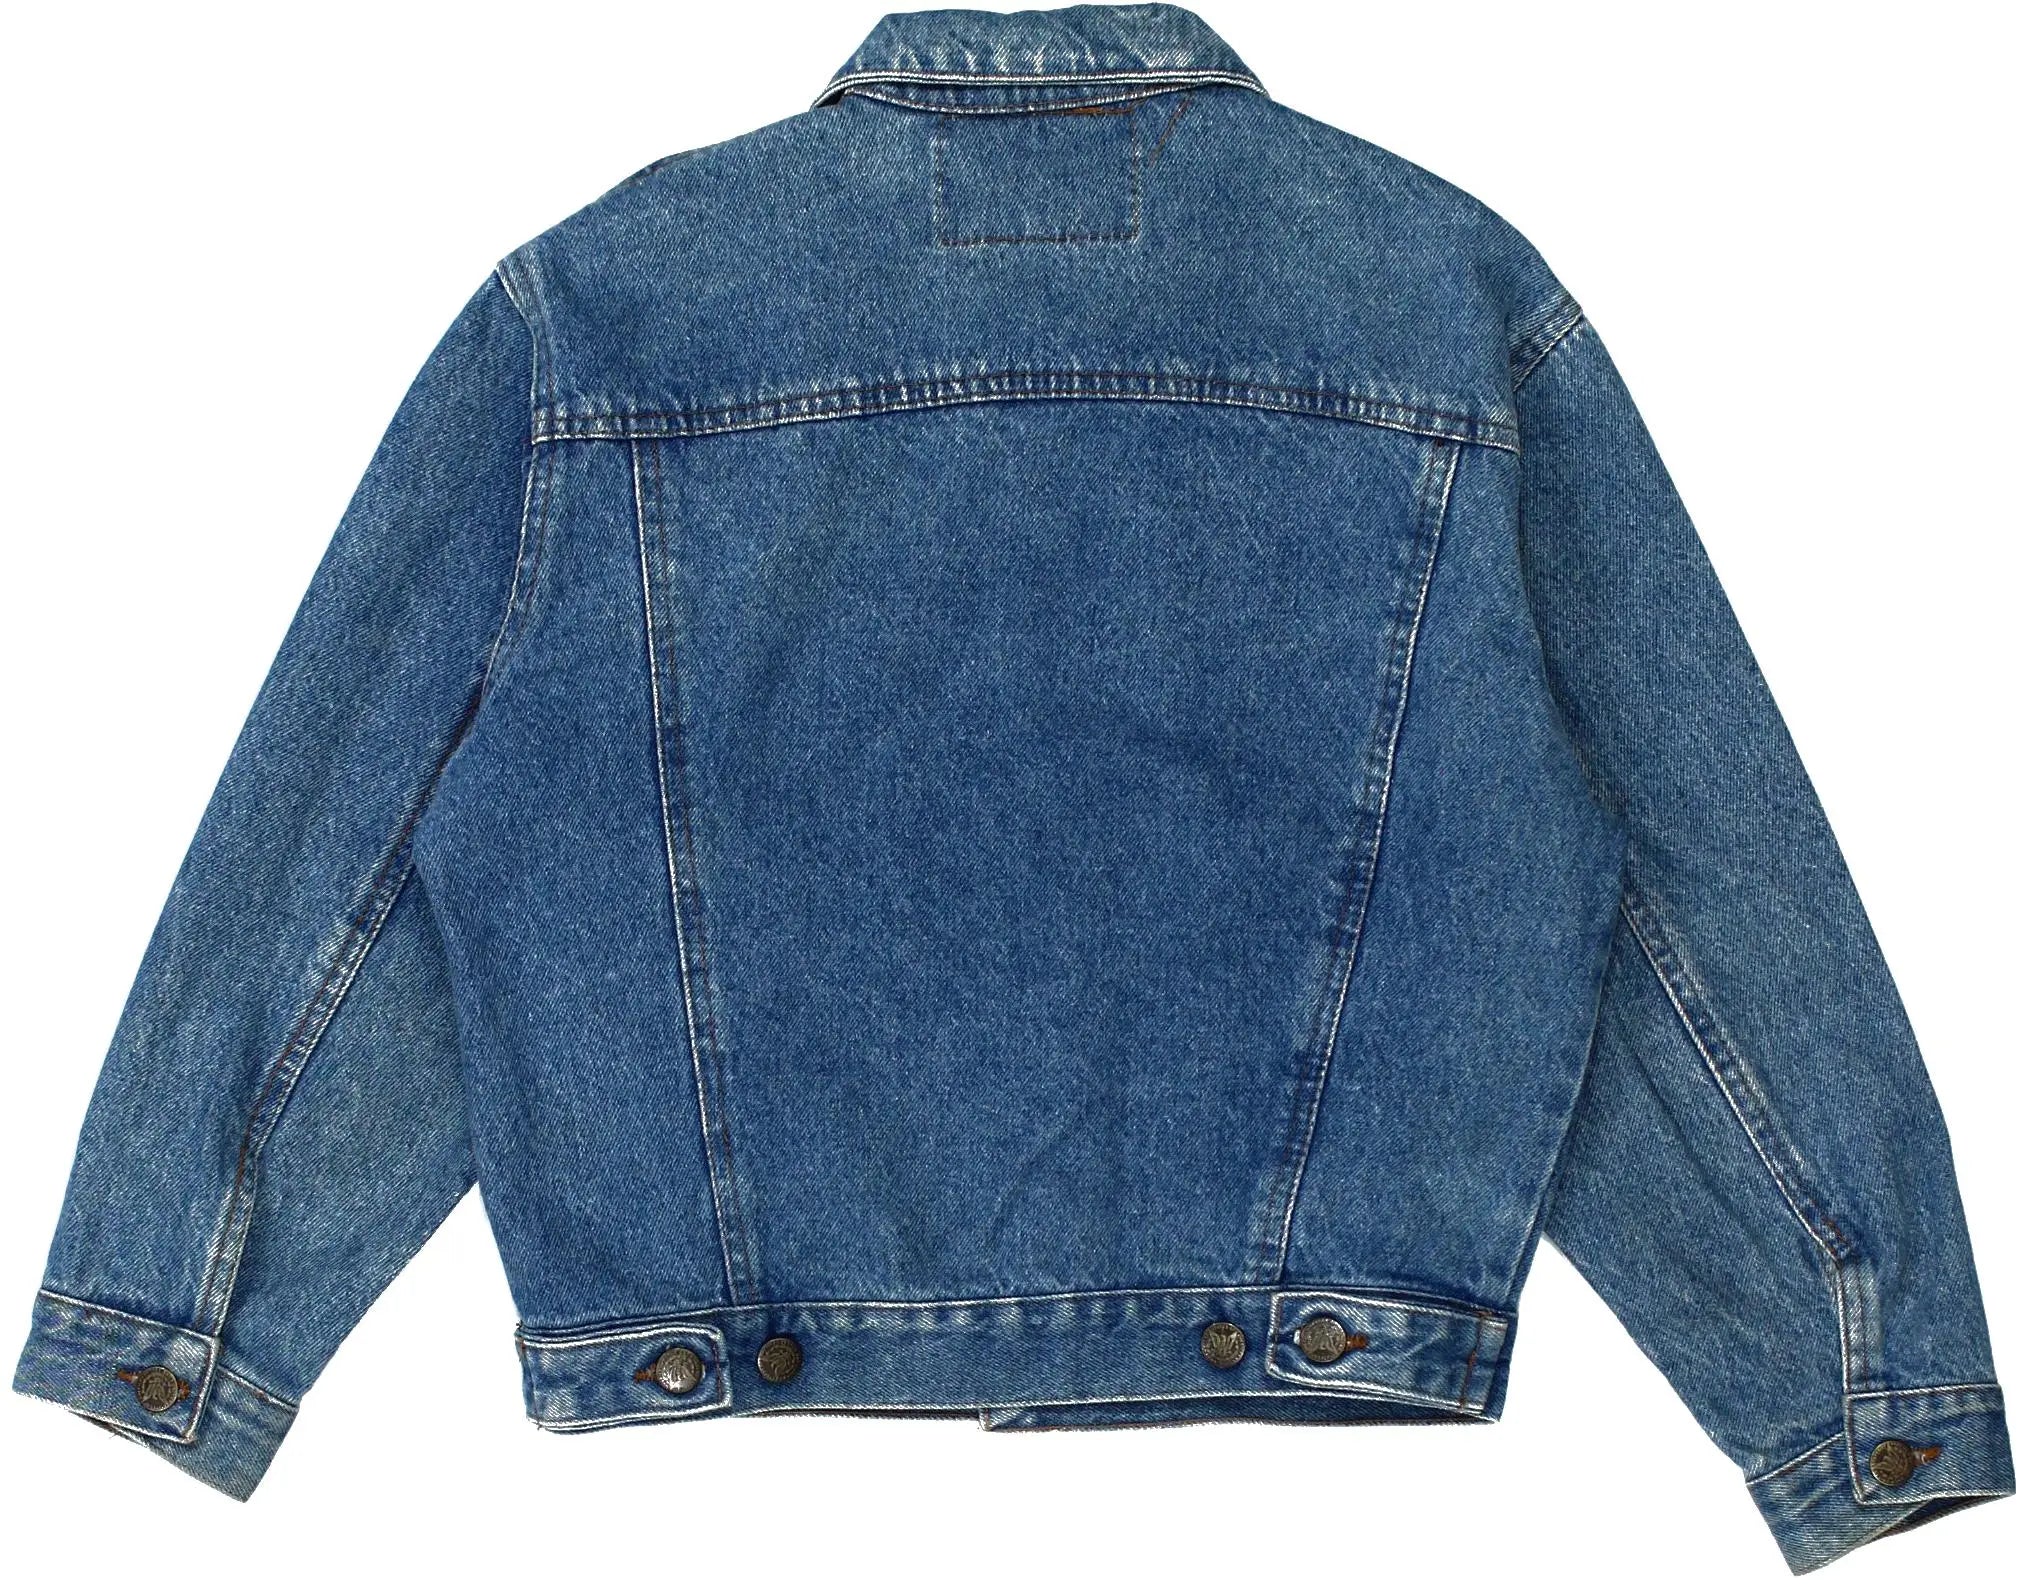 Brick & Chatter - Blue Denim Jacket- ThriftTale.com - Vintage and second handclothing